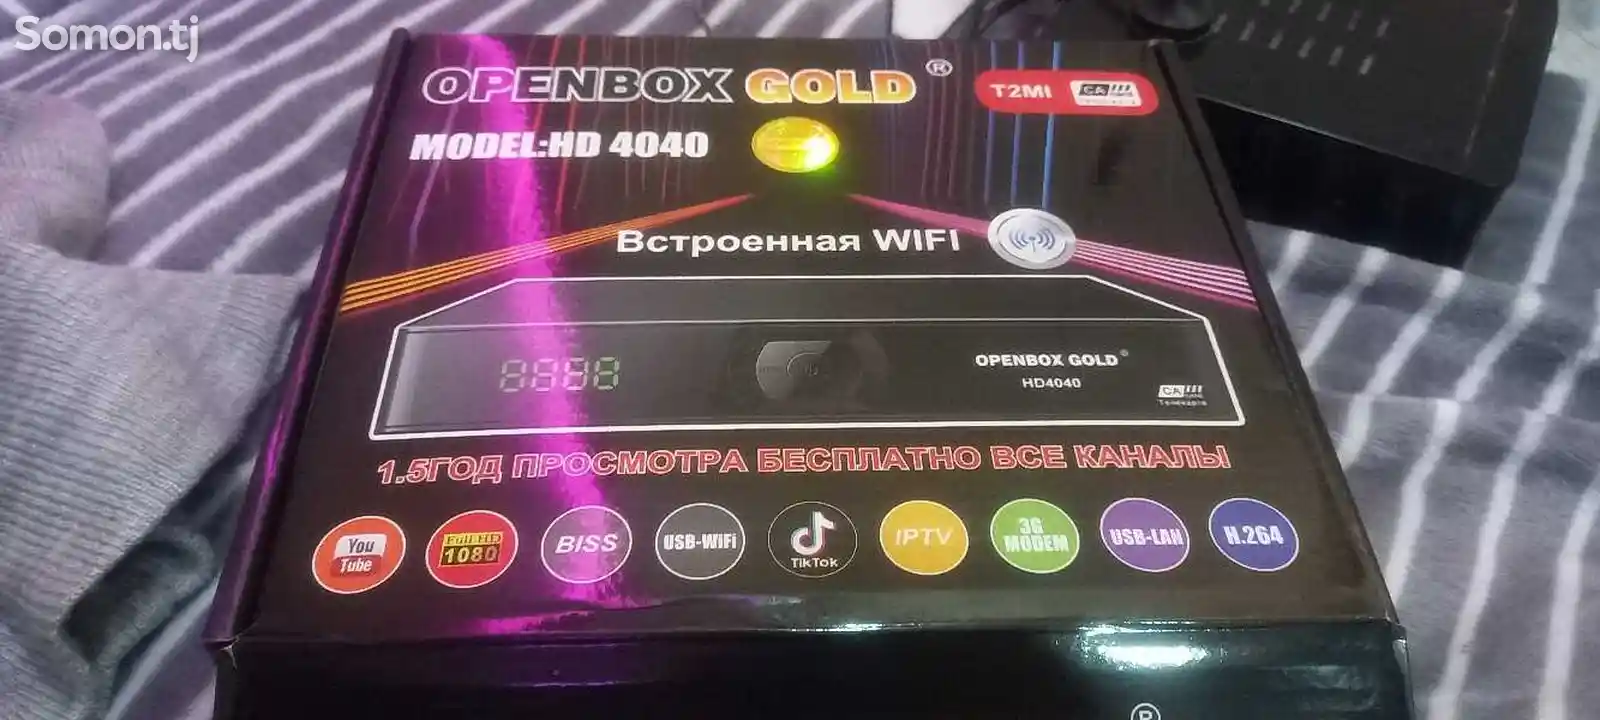 Ресивер Openbox Gold HD 4040-2